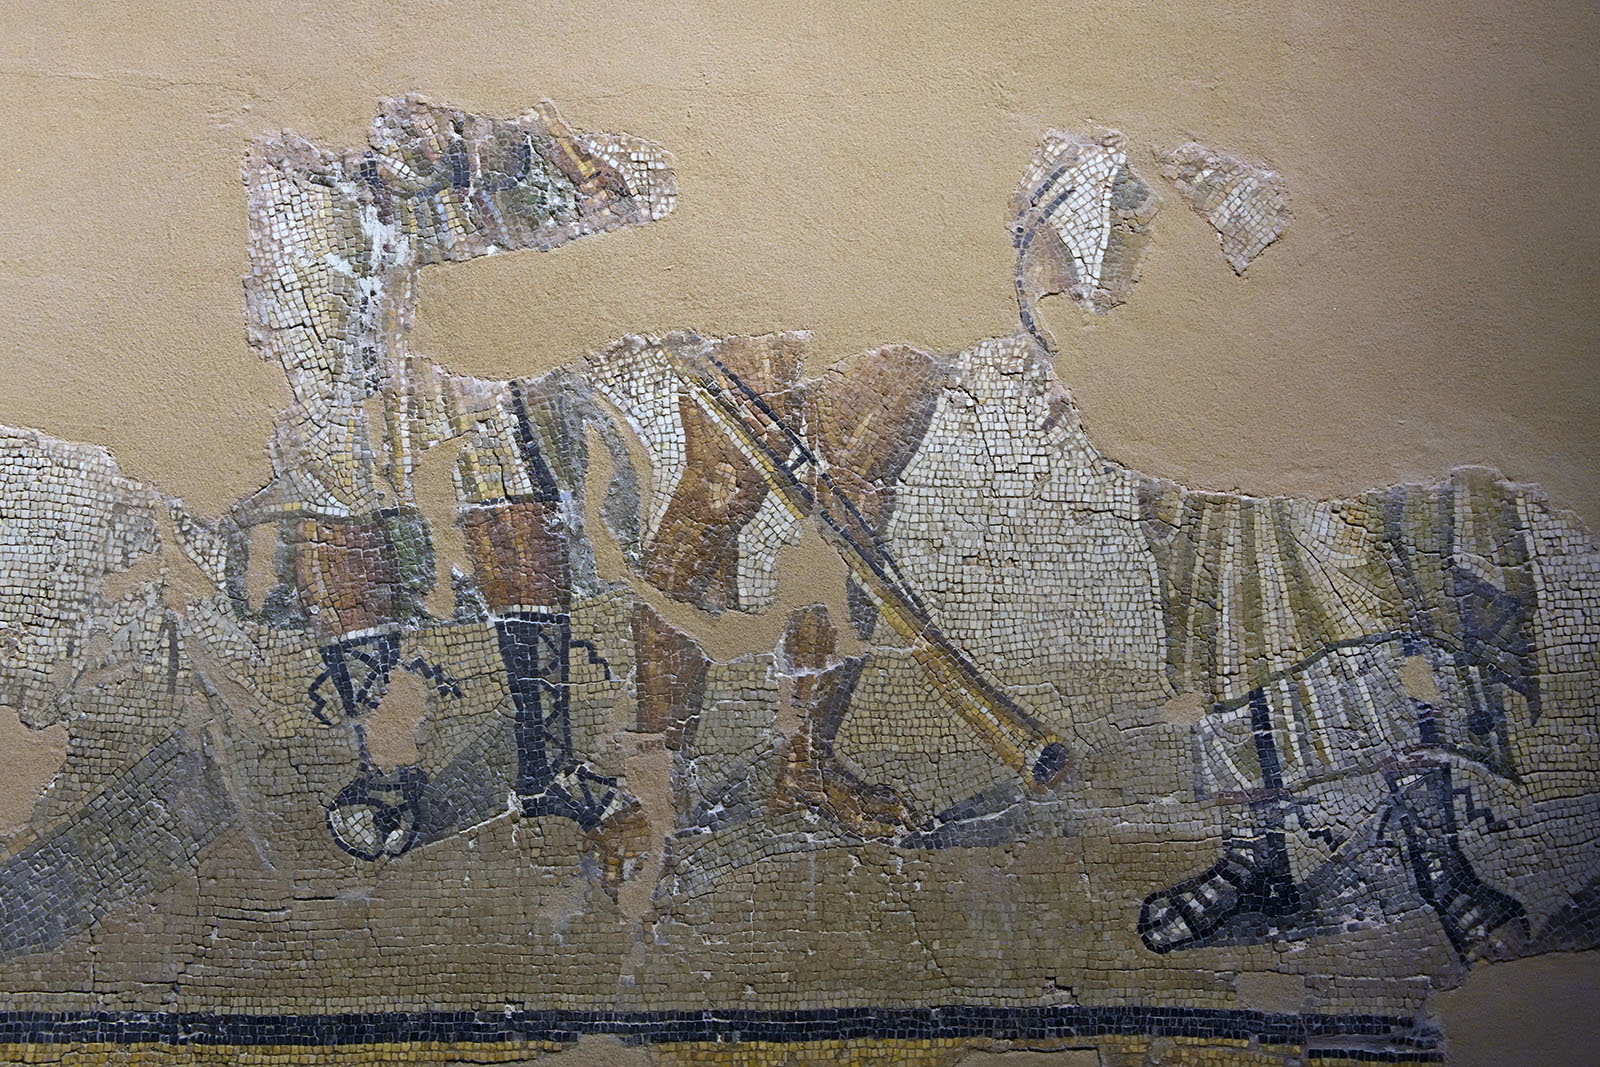 Antakya Archaeology Museum Constantine I period mosaic sept 2019 6107.jpg